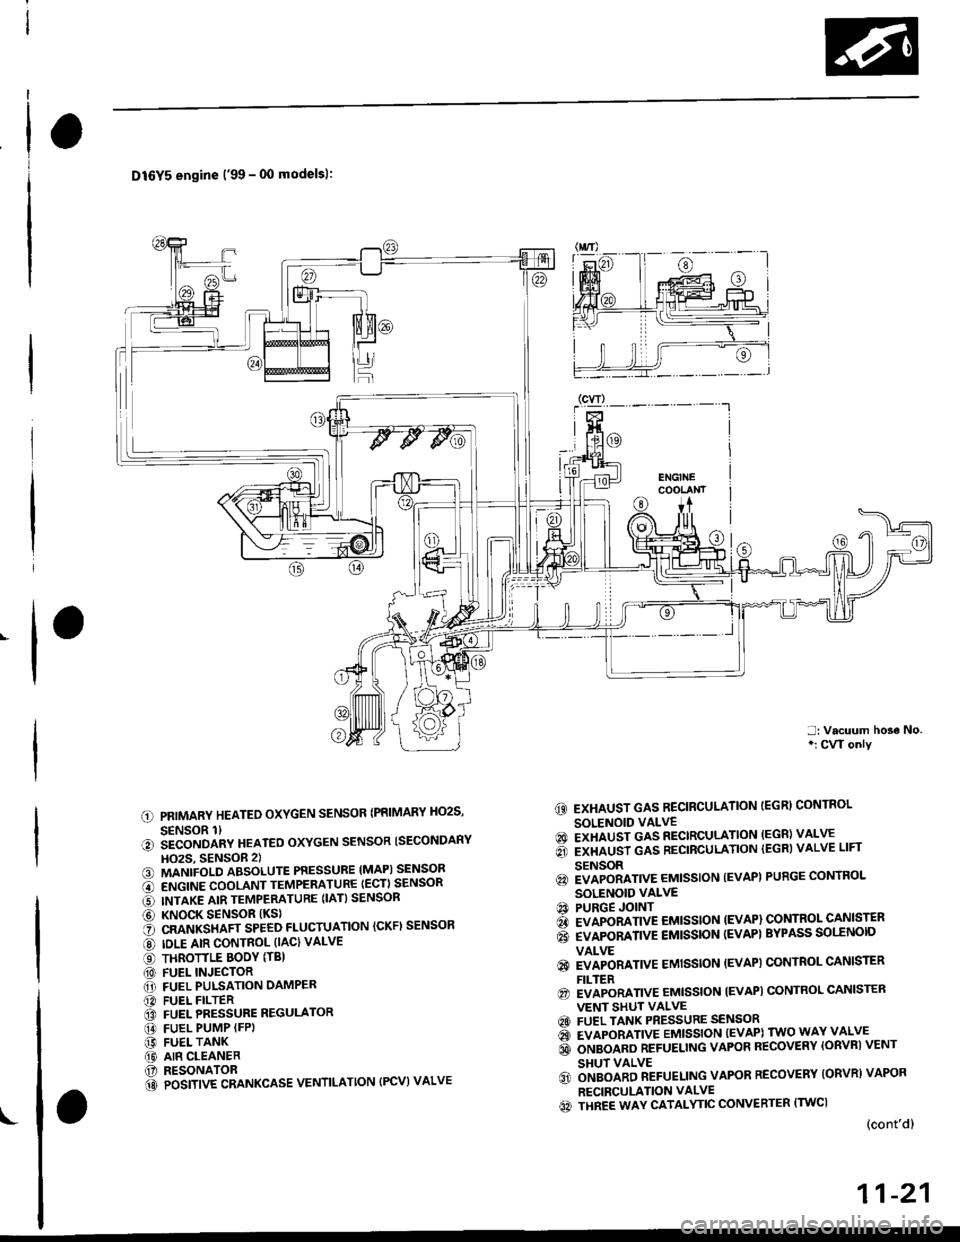 HONDA CIVIC 2000 6.G Workshop Manual D16Y5 engine (99 - 00 modelsl:
O) PRIMARY HEATED OXYGEN SENSOR (PBIMARY HO2S,
SENSOR 1)
O SECONDARY HEATEO OXYGEN SENSOR {SECONDARY
HO2S. SENSOR 2)
6] MANIFOLD ABSOLUTE PRESSURE IMAPI SENSOR
rO CruCI